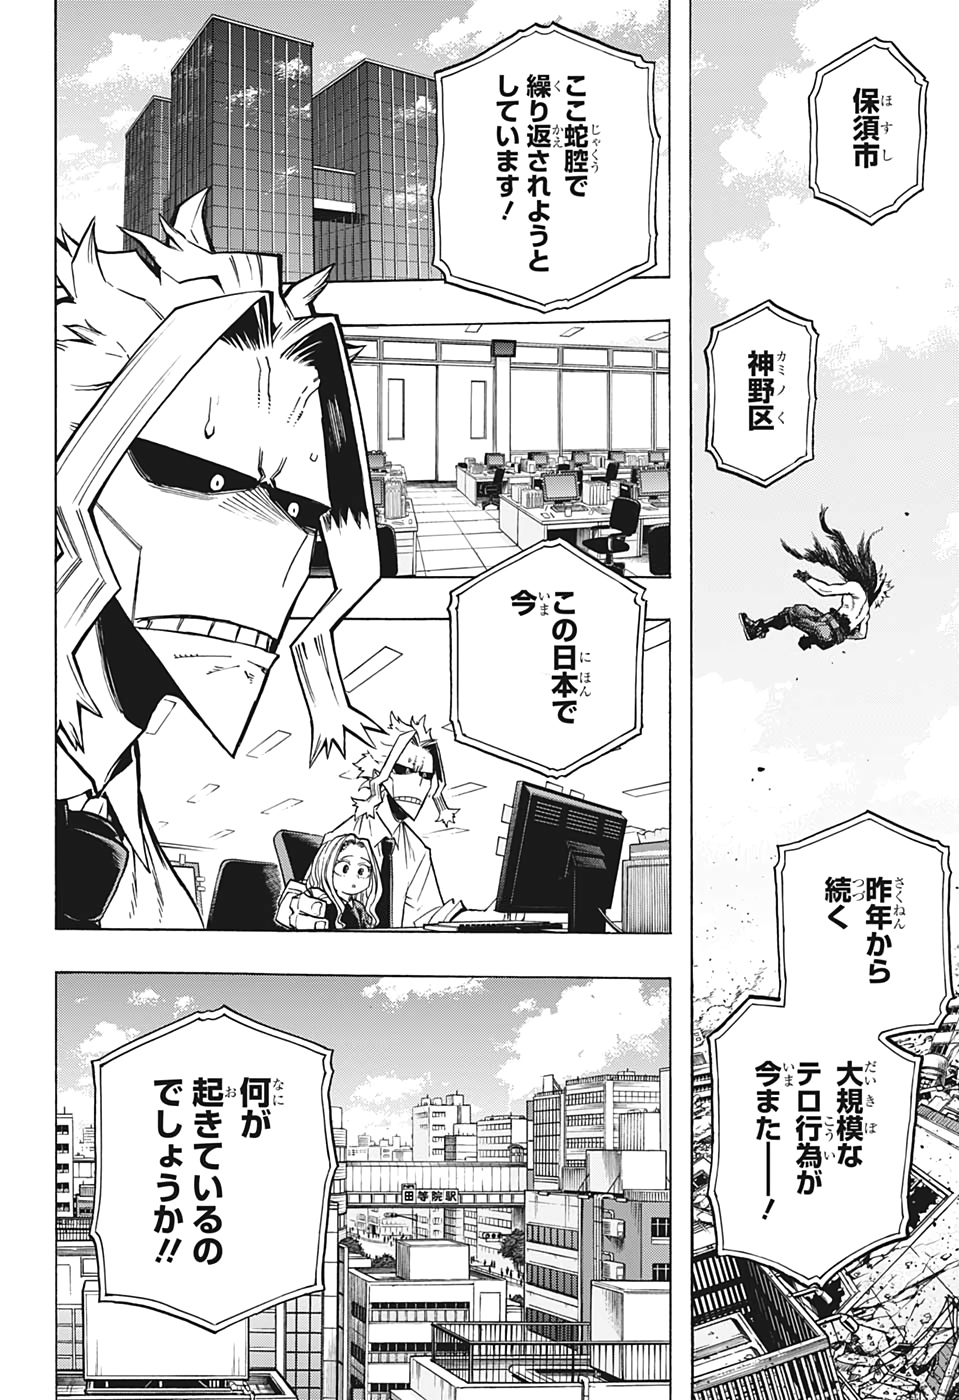 Boku no Hero Academia - Chapter 276 - Page 2